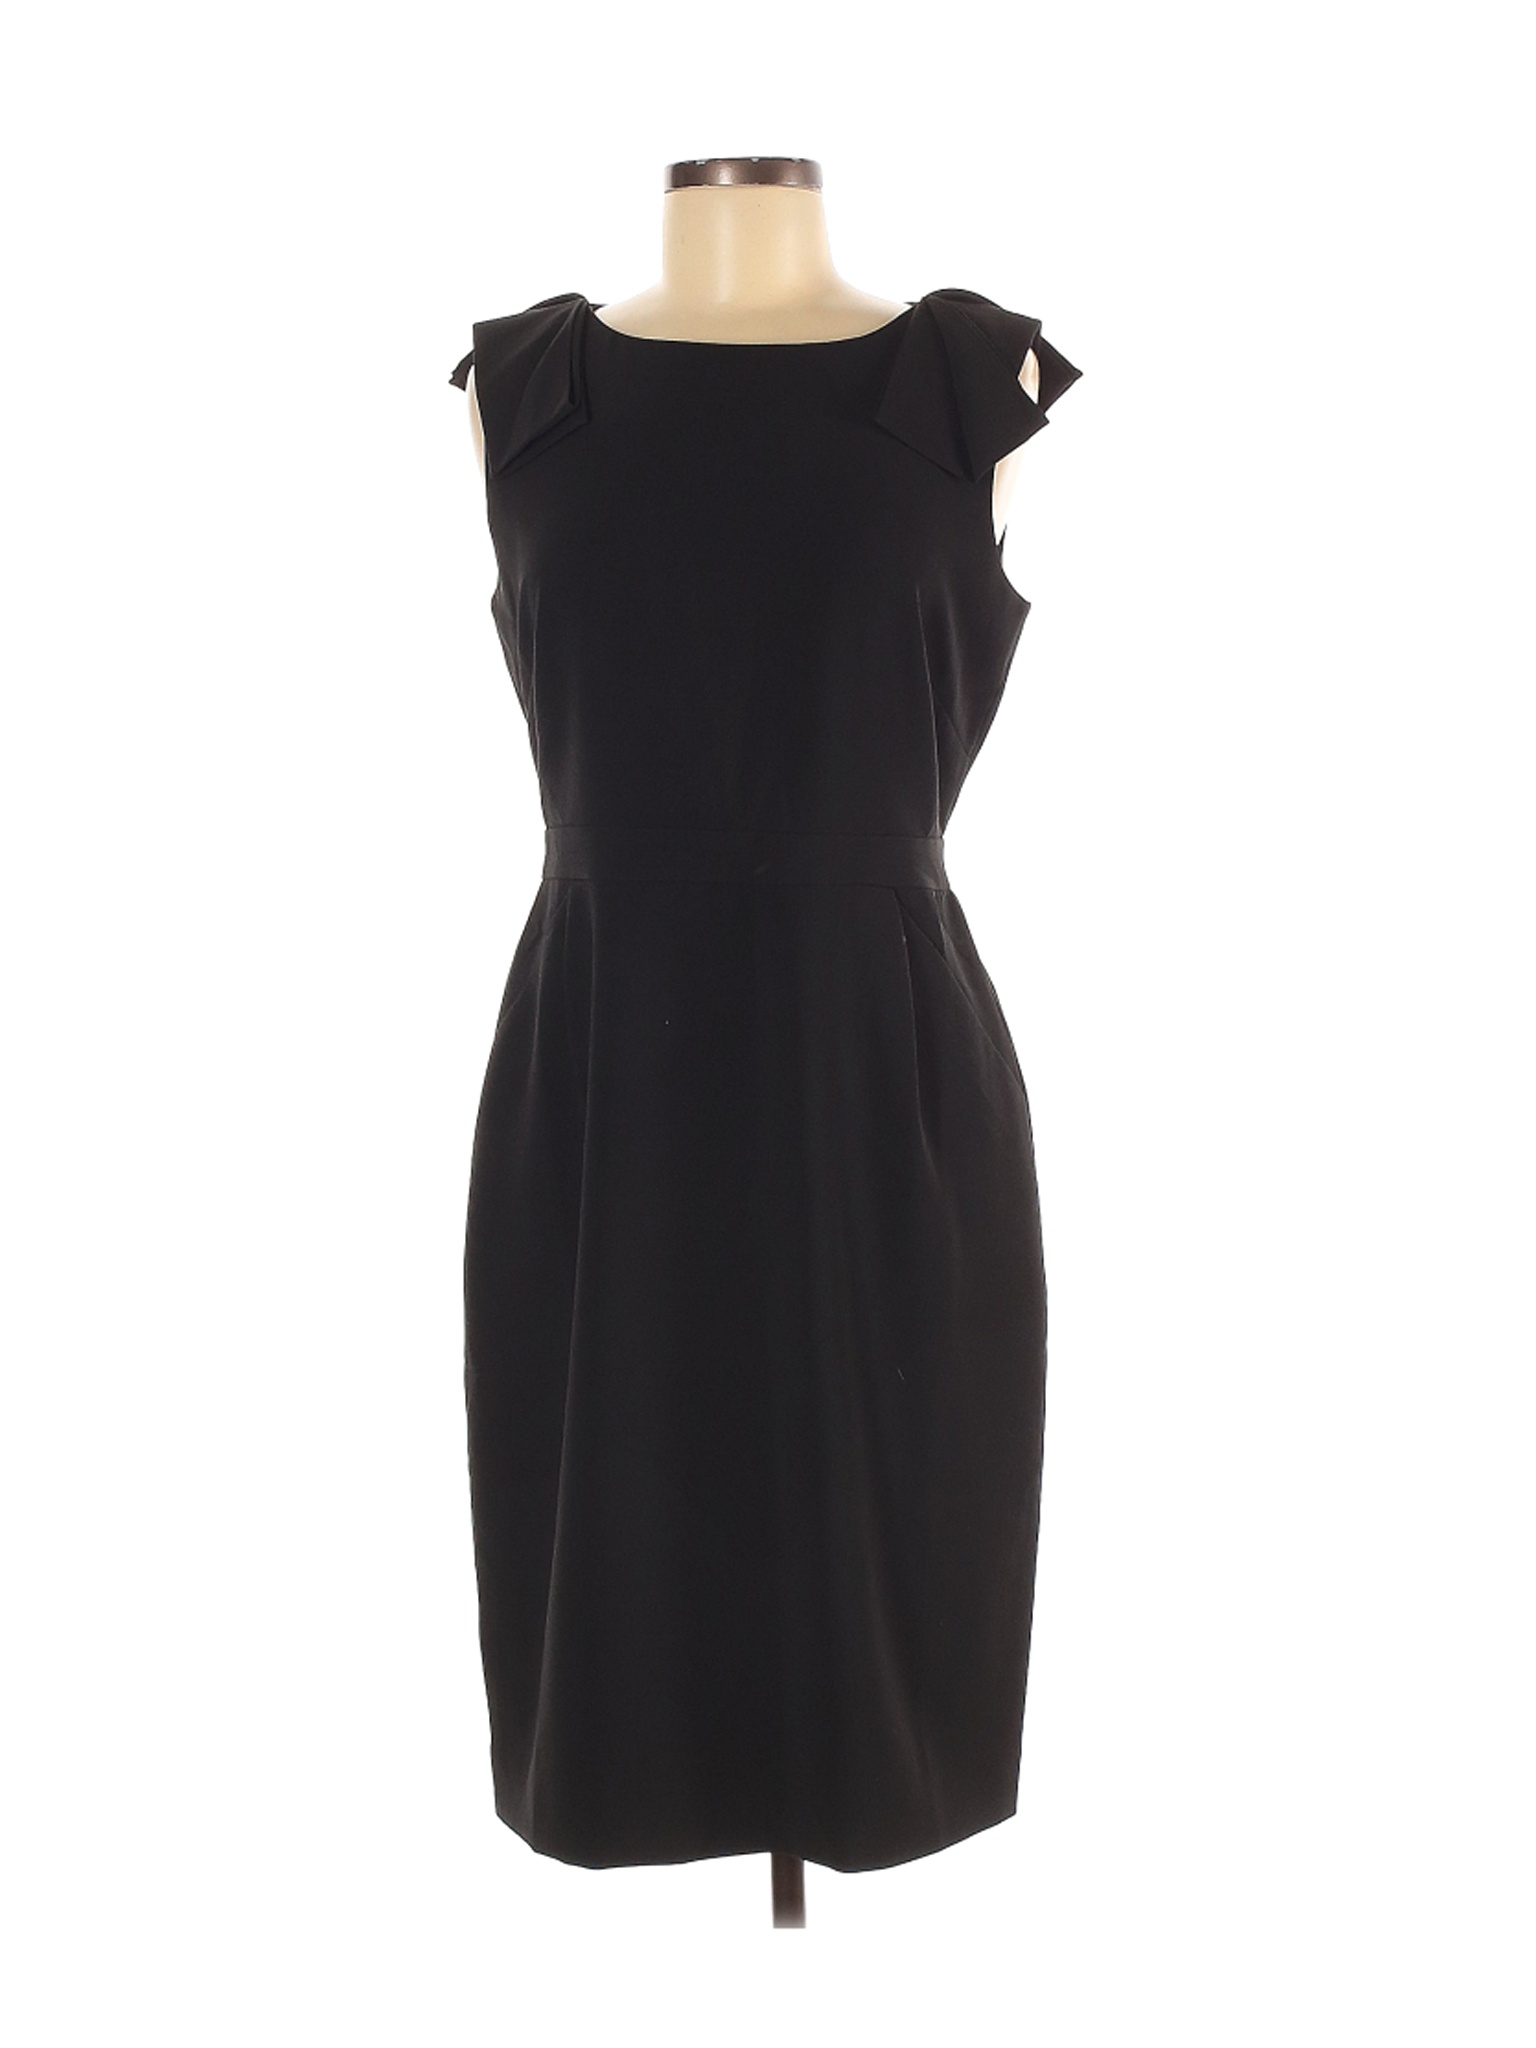 J.Crew Factory Store Women Black Cocktail Dress 6 | eBay